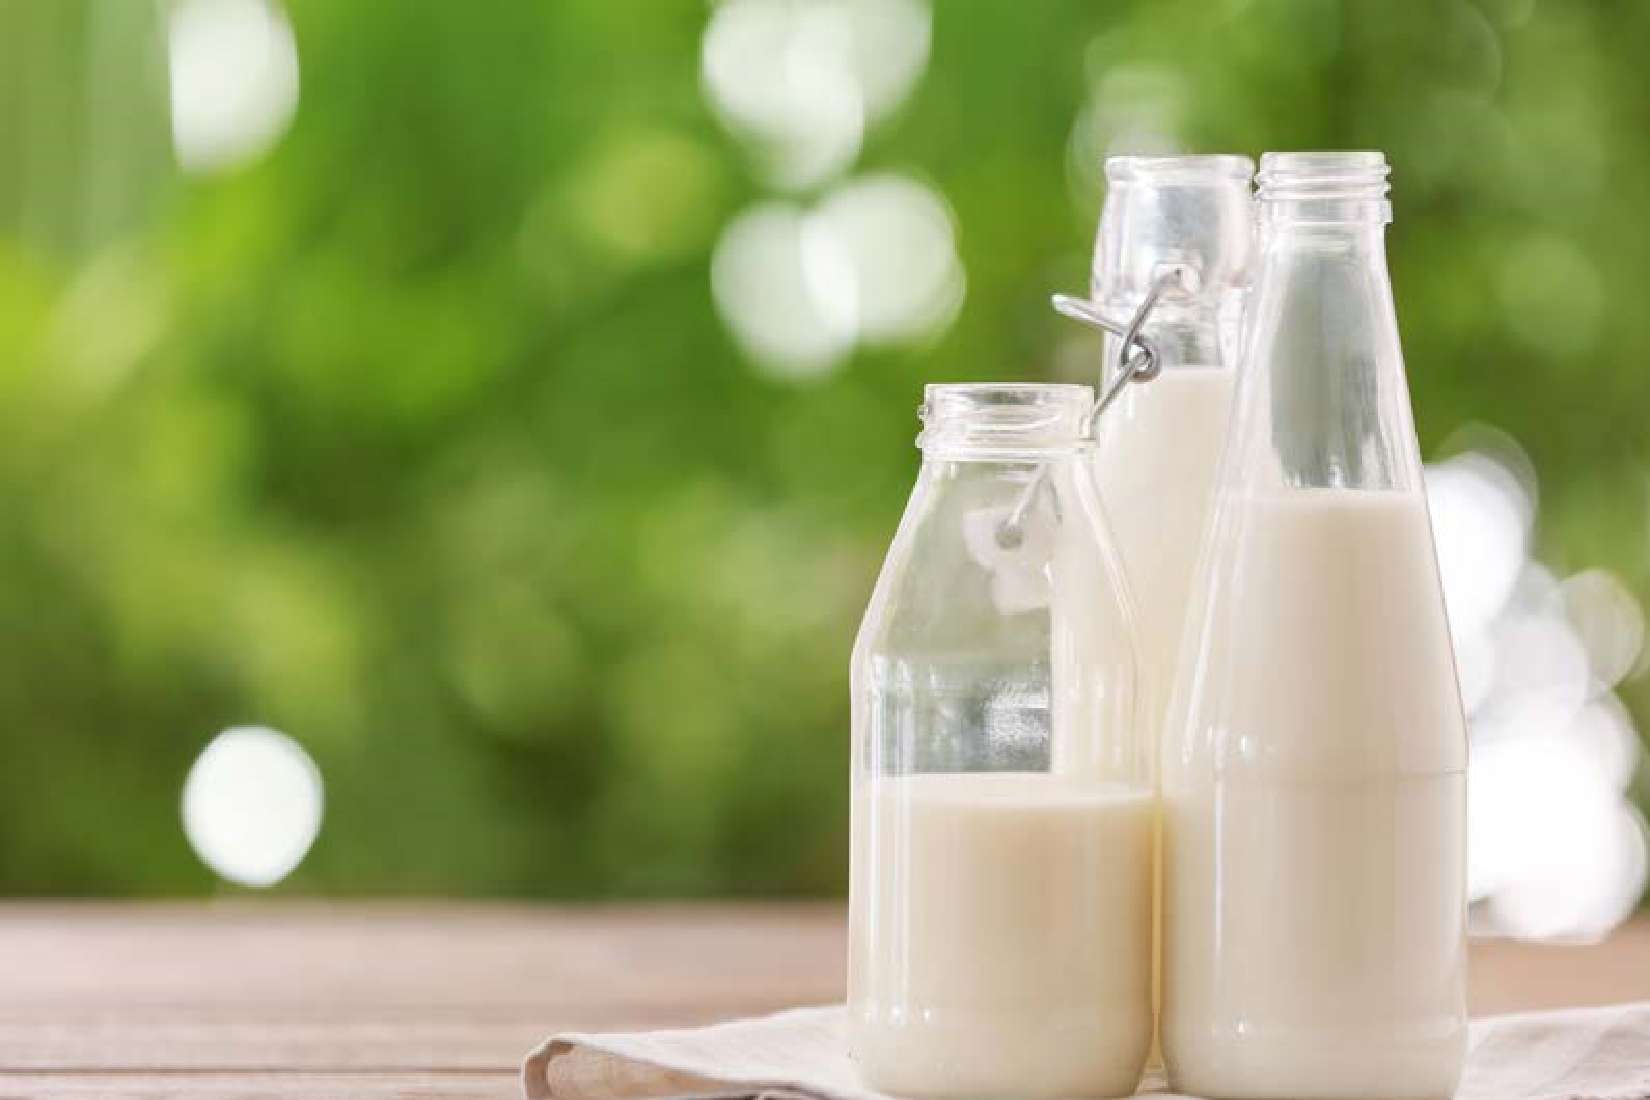 Nature’s Best Dairy® Grade A Lowfat Buttermilk, Grade A Half & Half, and Grade A 36% Heavy Whipping Cream